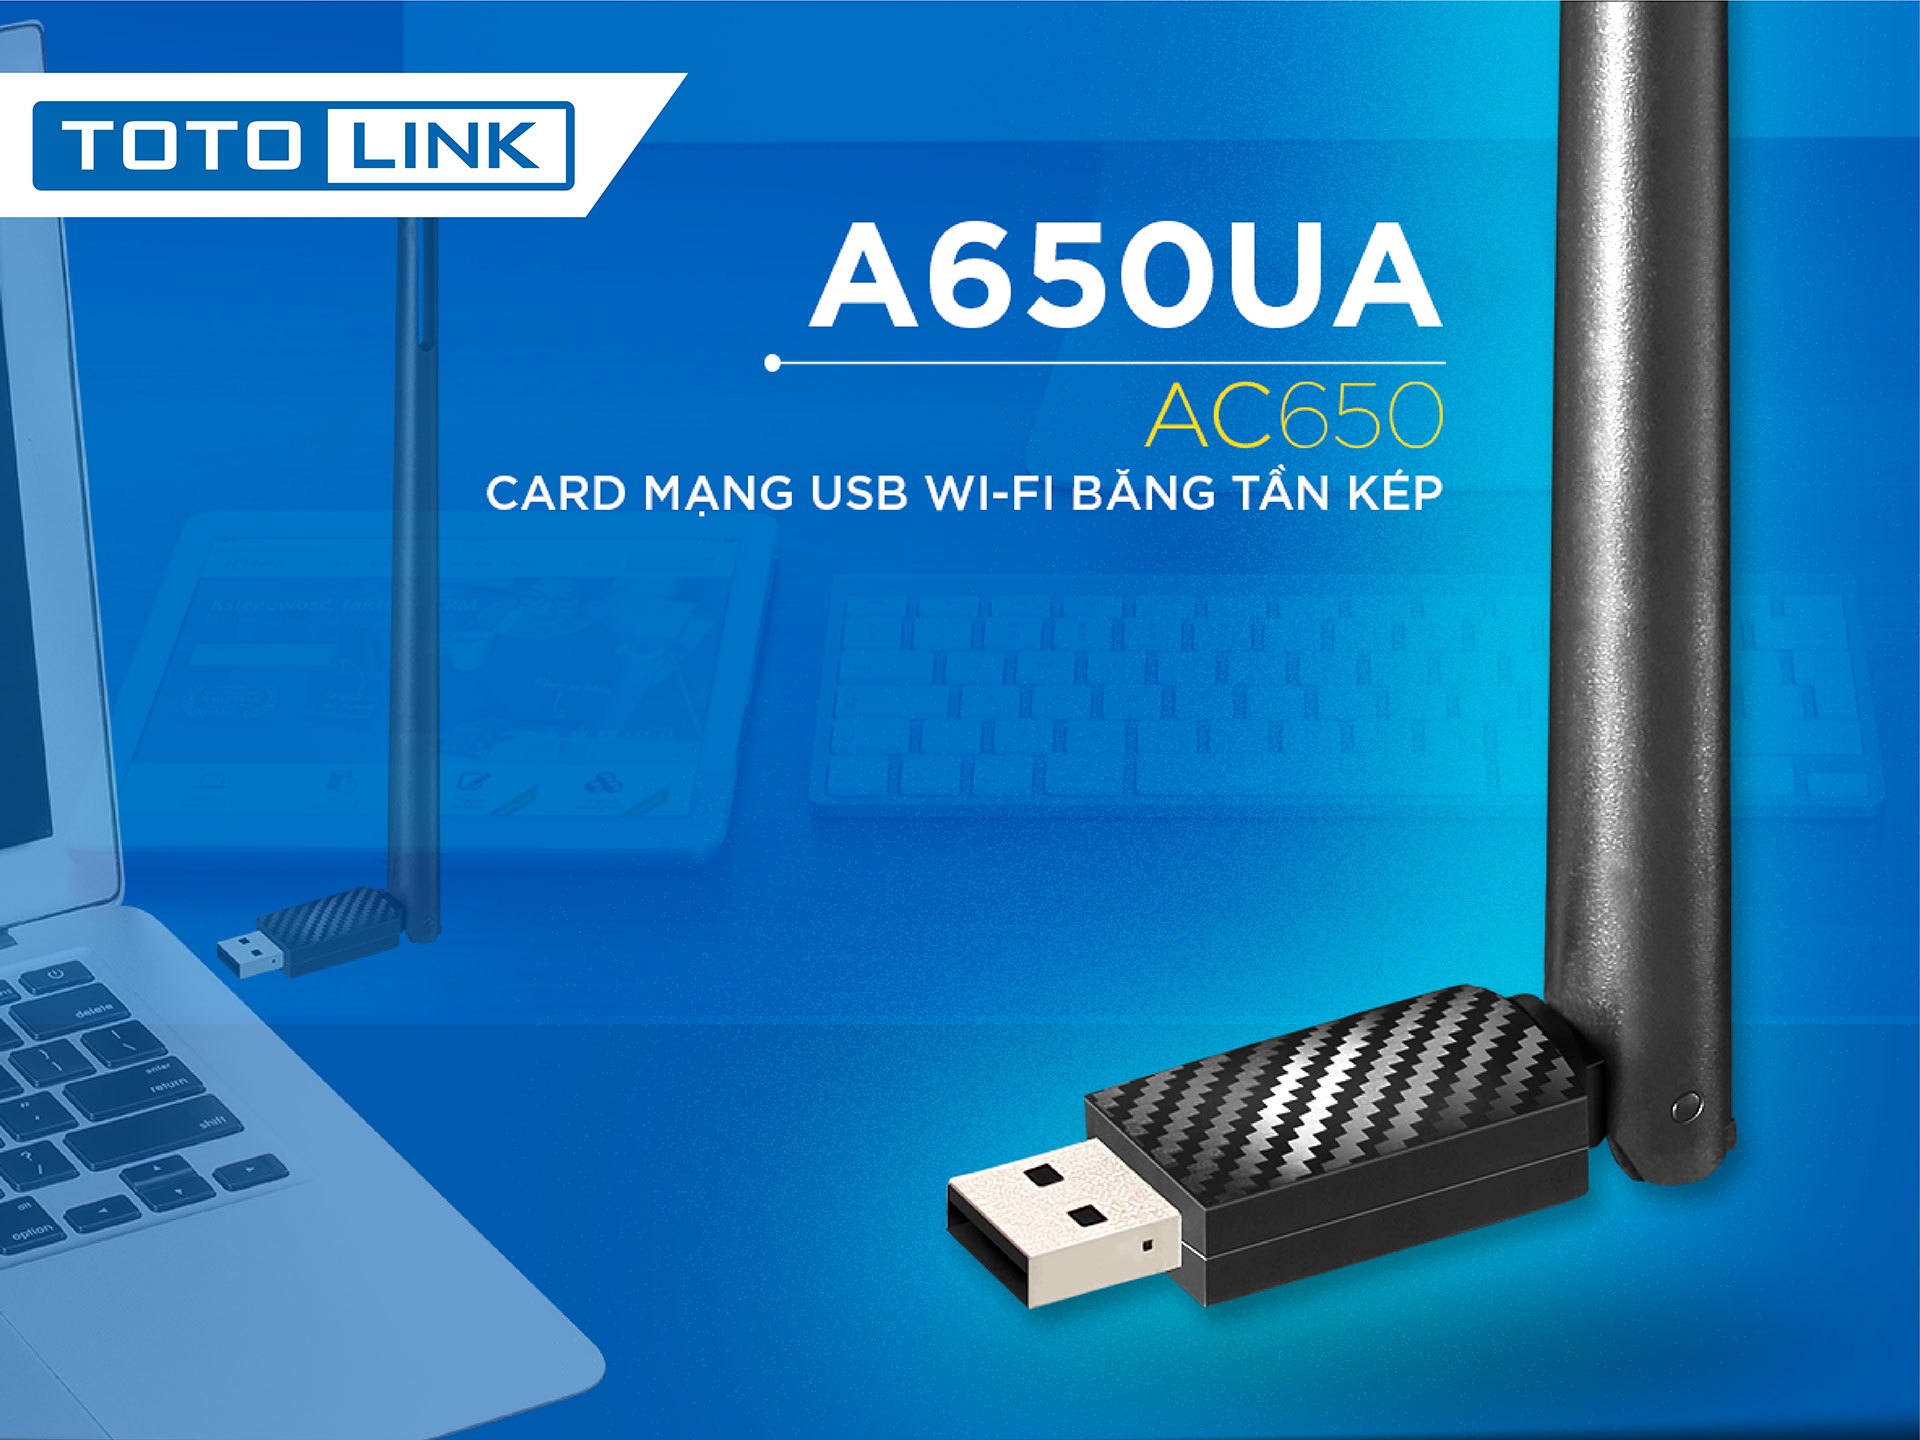 USB Wifi Totolink băng tần kép AC650 A650UA